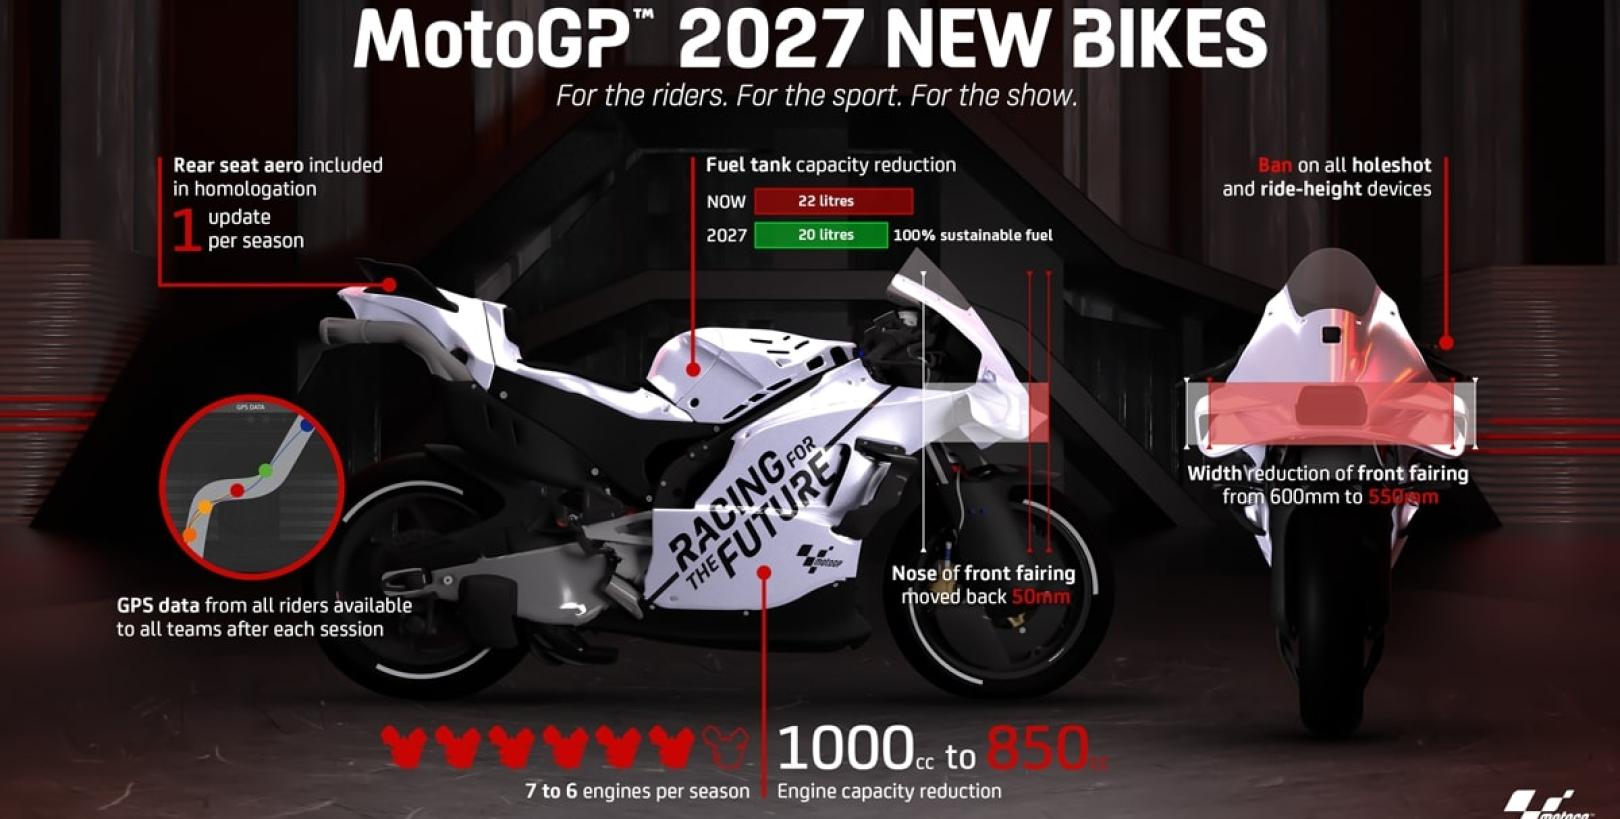 motomag MotoGP – Αλλαγές στους τεχνικούς κανονισμούς για το 2027, μια νέα εποχή ξεκινά [VIDEO]